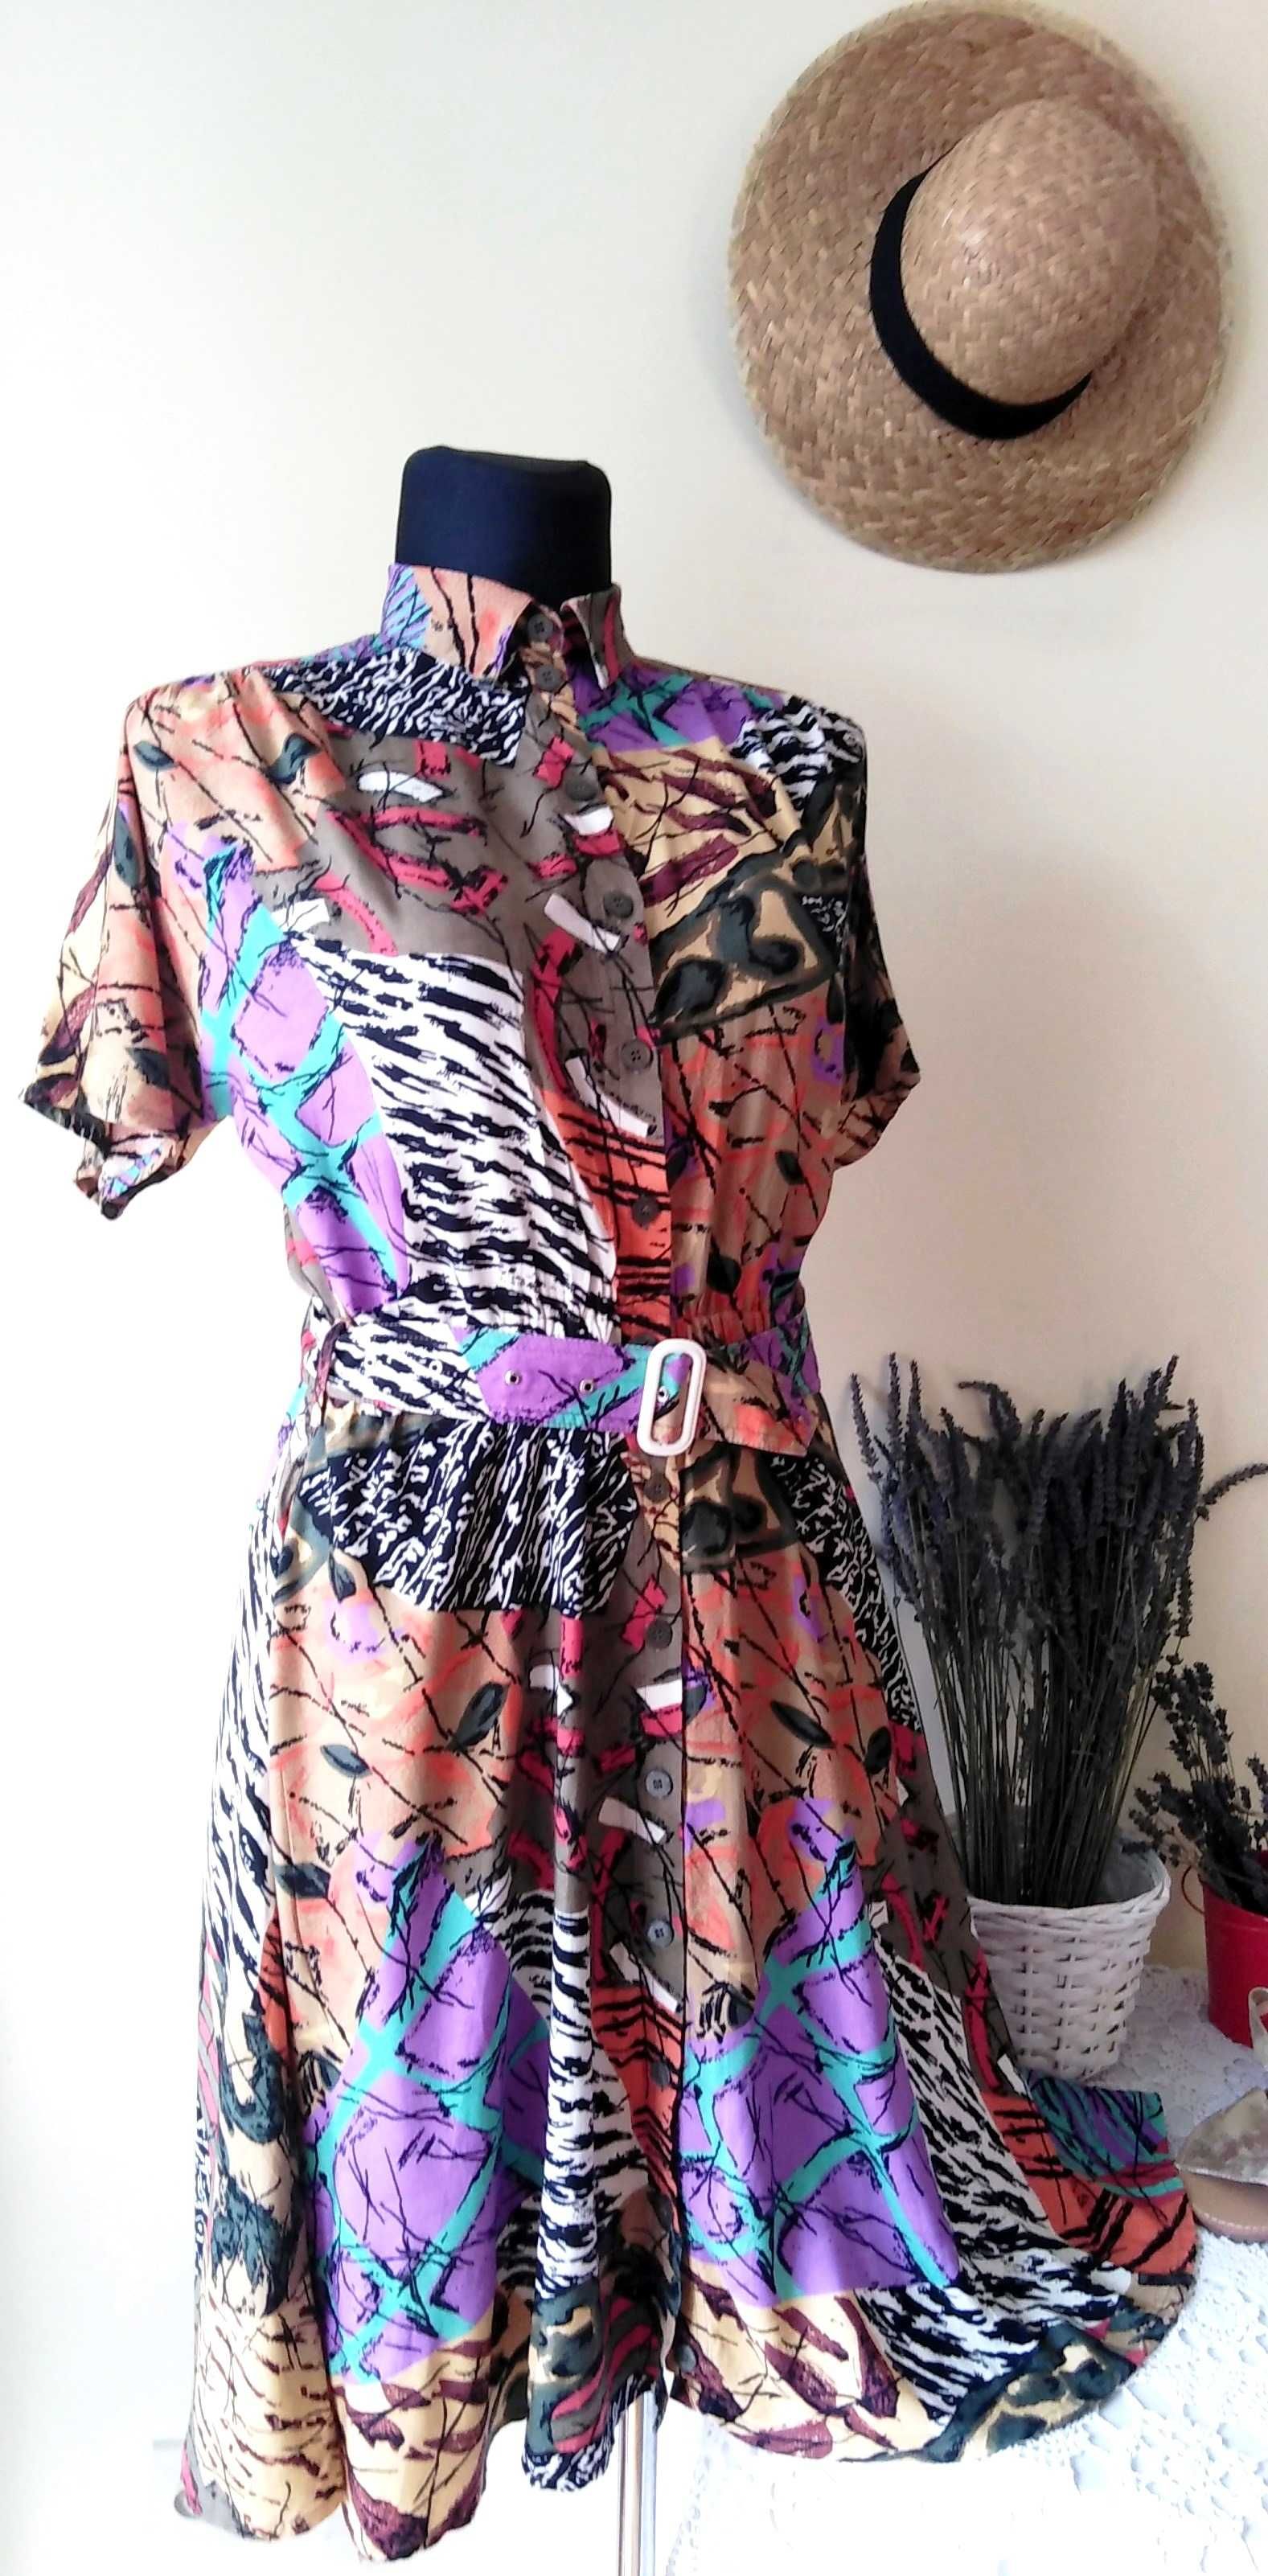 letnia sukienka 40/L  szmizjerka rozpinana pasek kieszenie #vintage